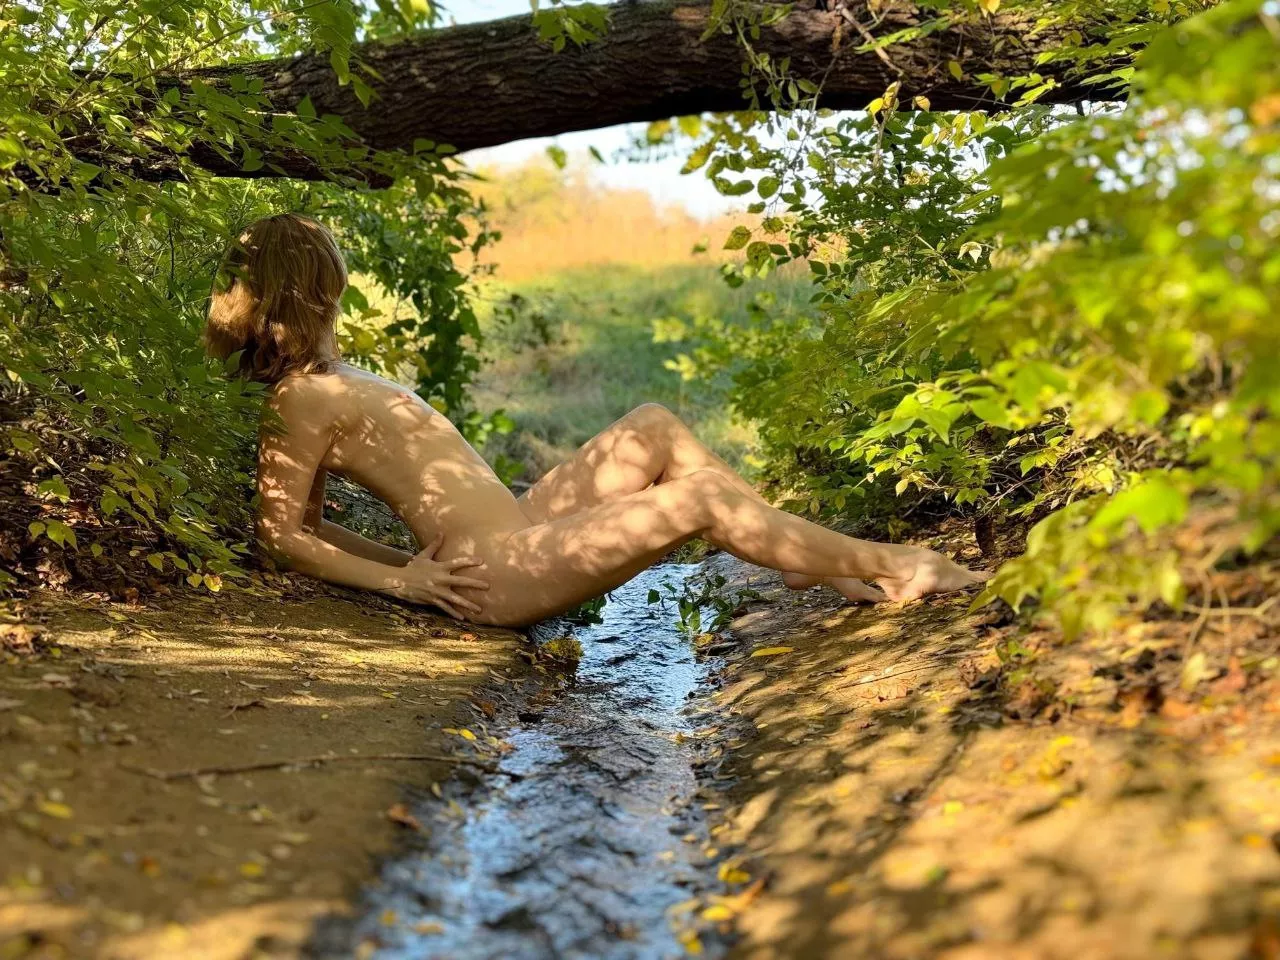 Irrigation System Nudes Nakedadventures Nude Pics Org